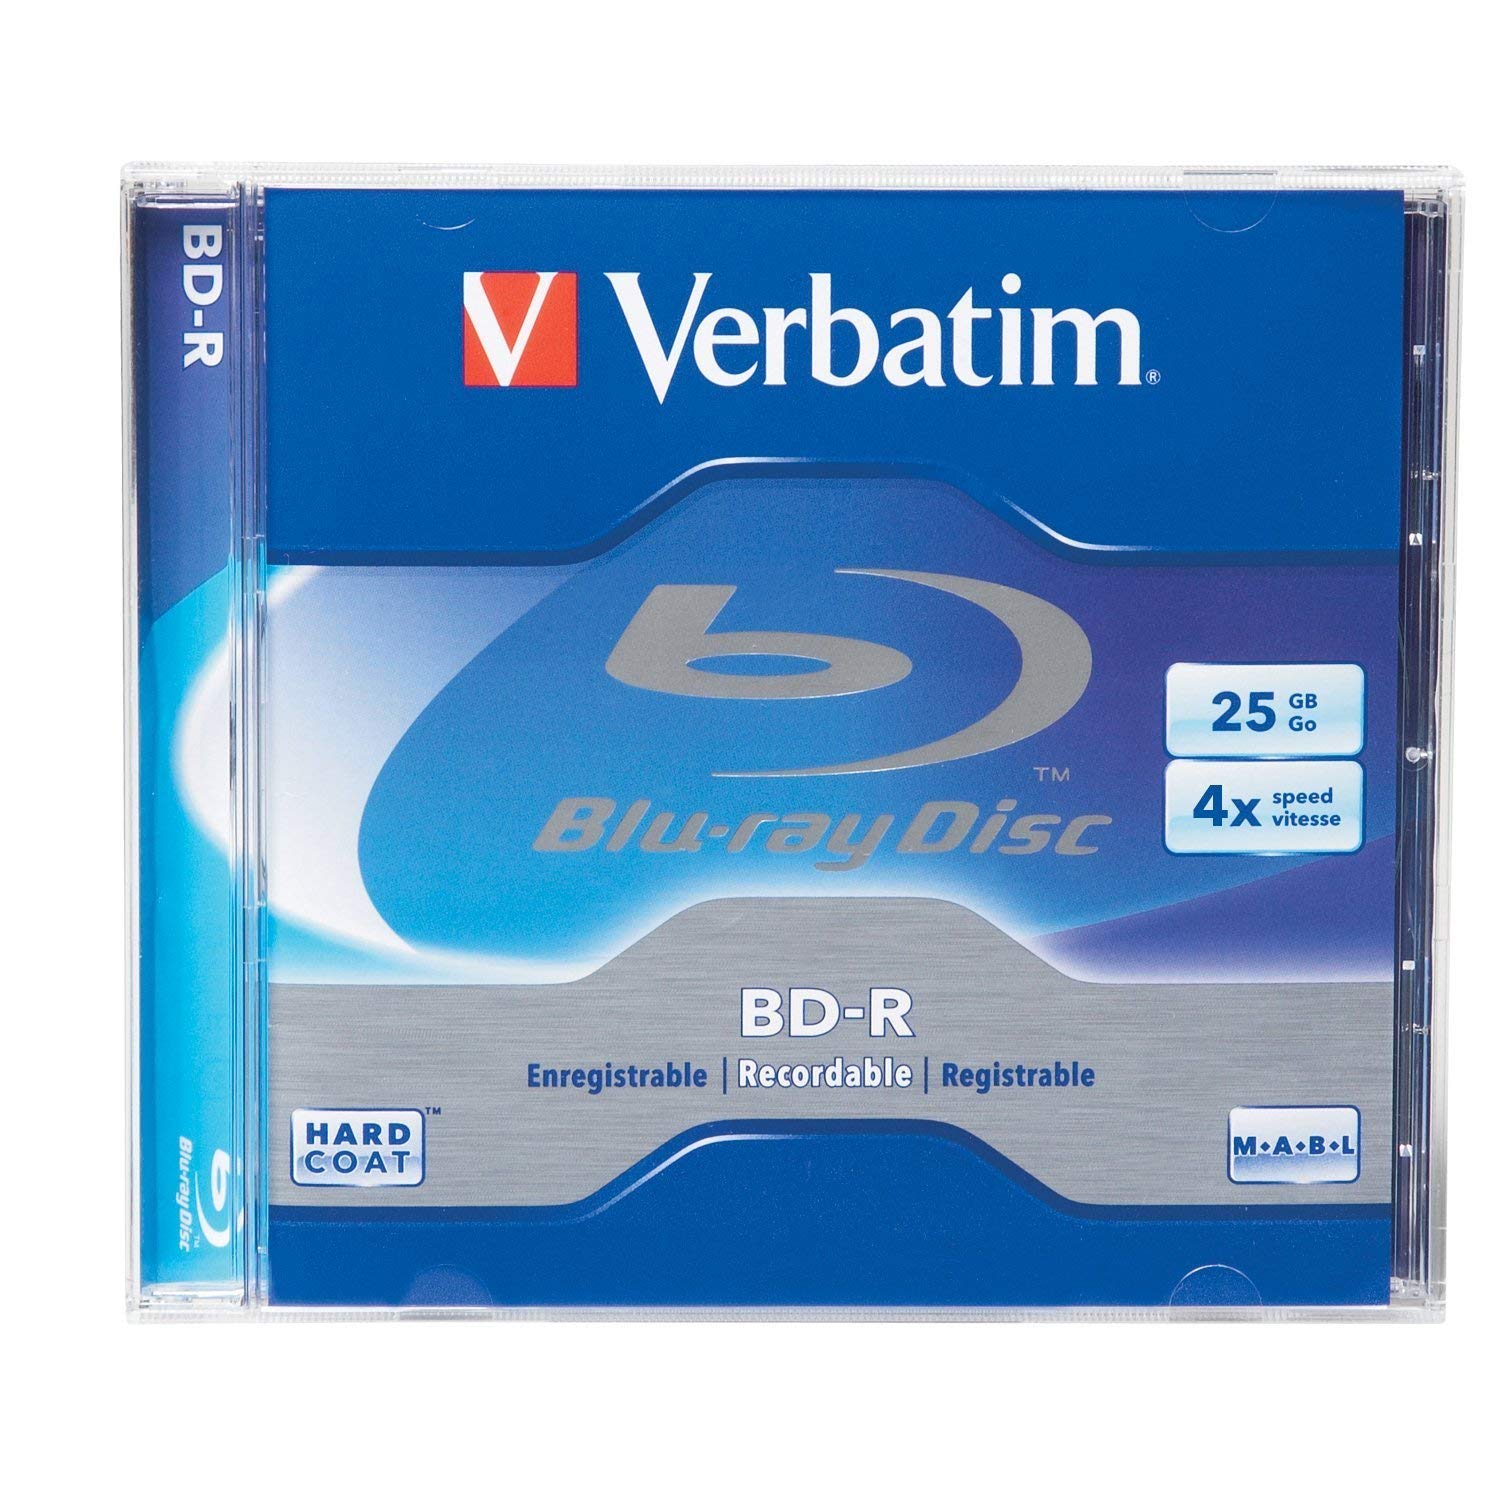 Verbatim Blu-Ray BD-R 25Gb 1pk 4X